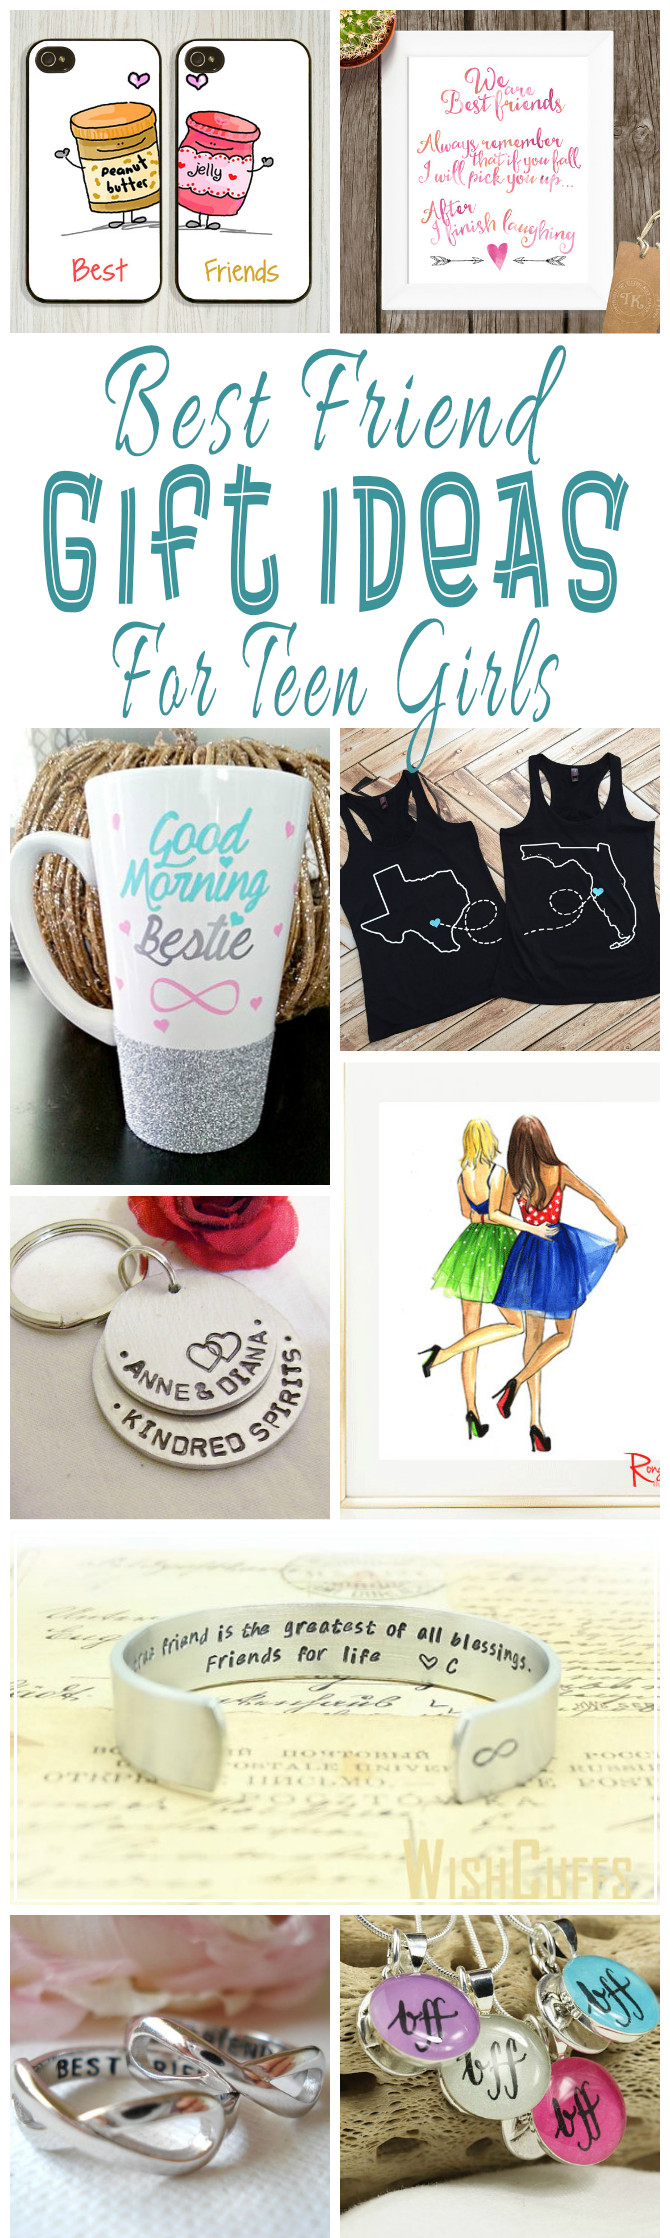 Best Gift Ideas For Girls
 Best Friend Gift Ideas For Teens